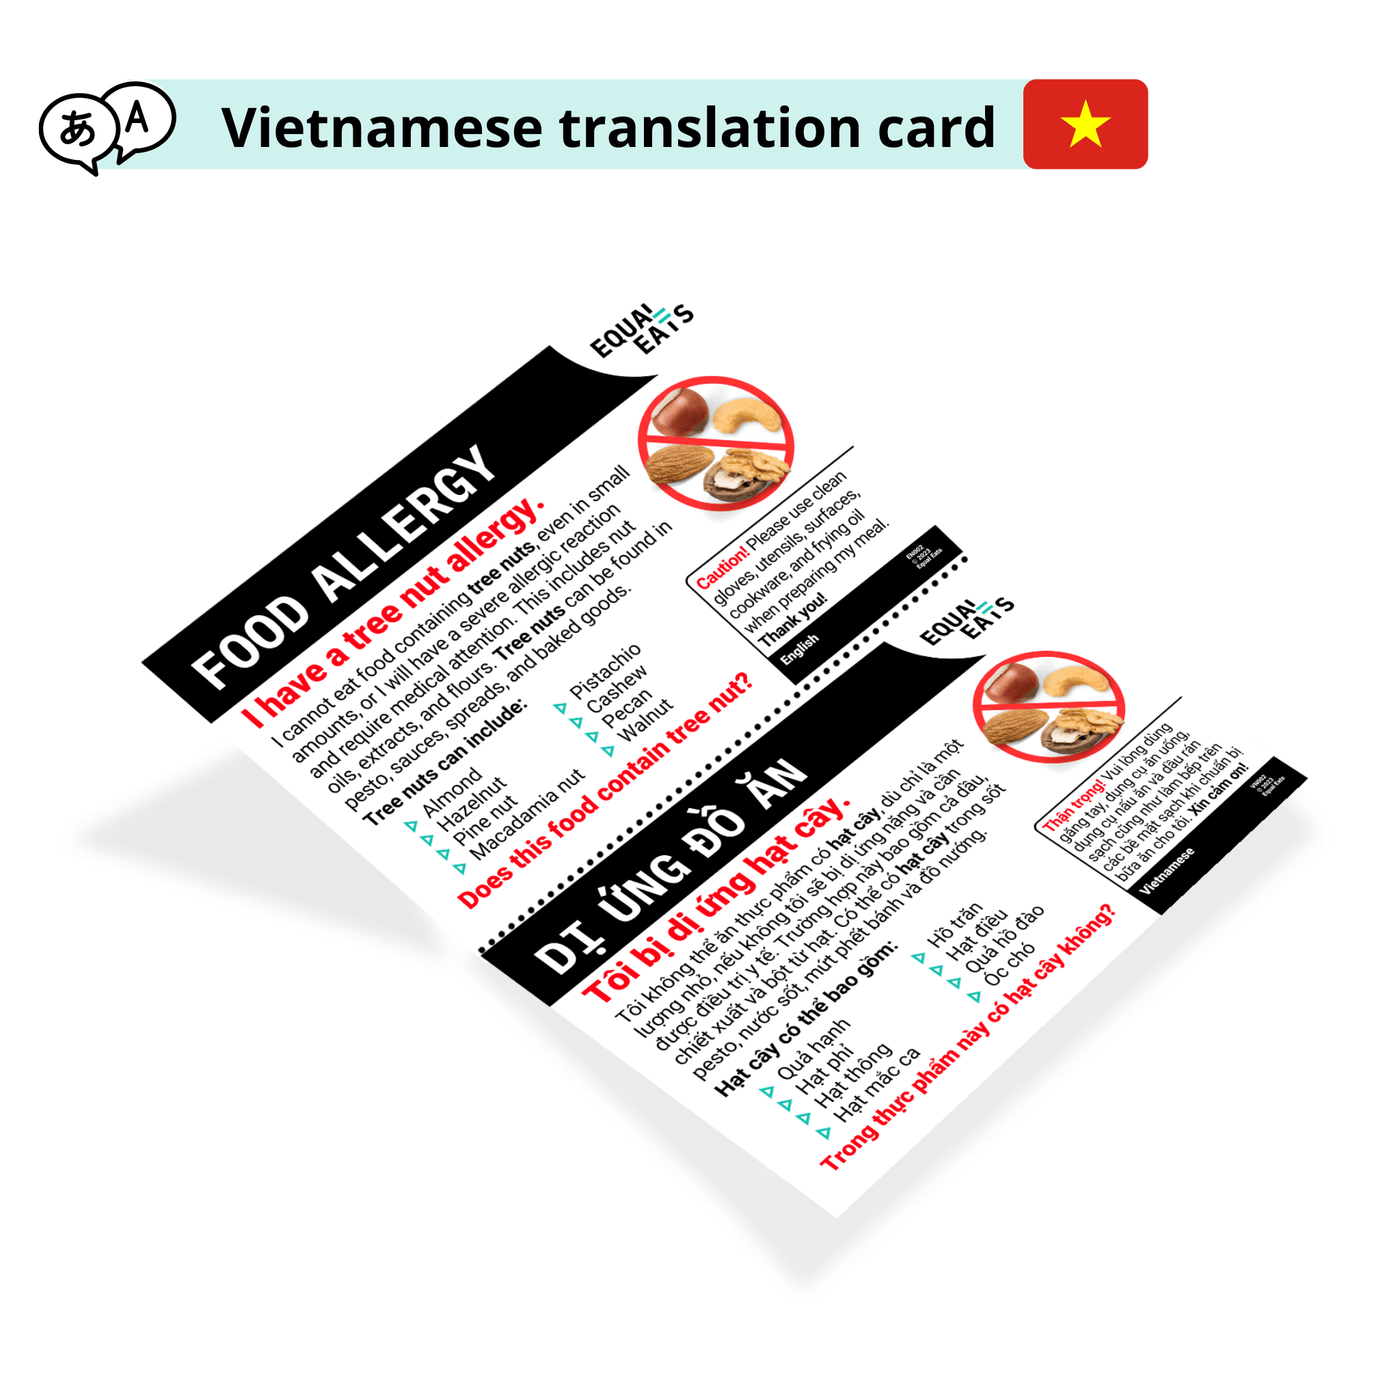 Vietnamese Tree Nut Allergy Card